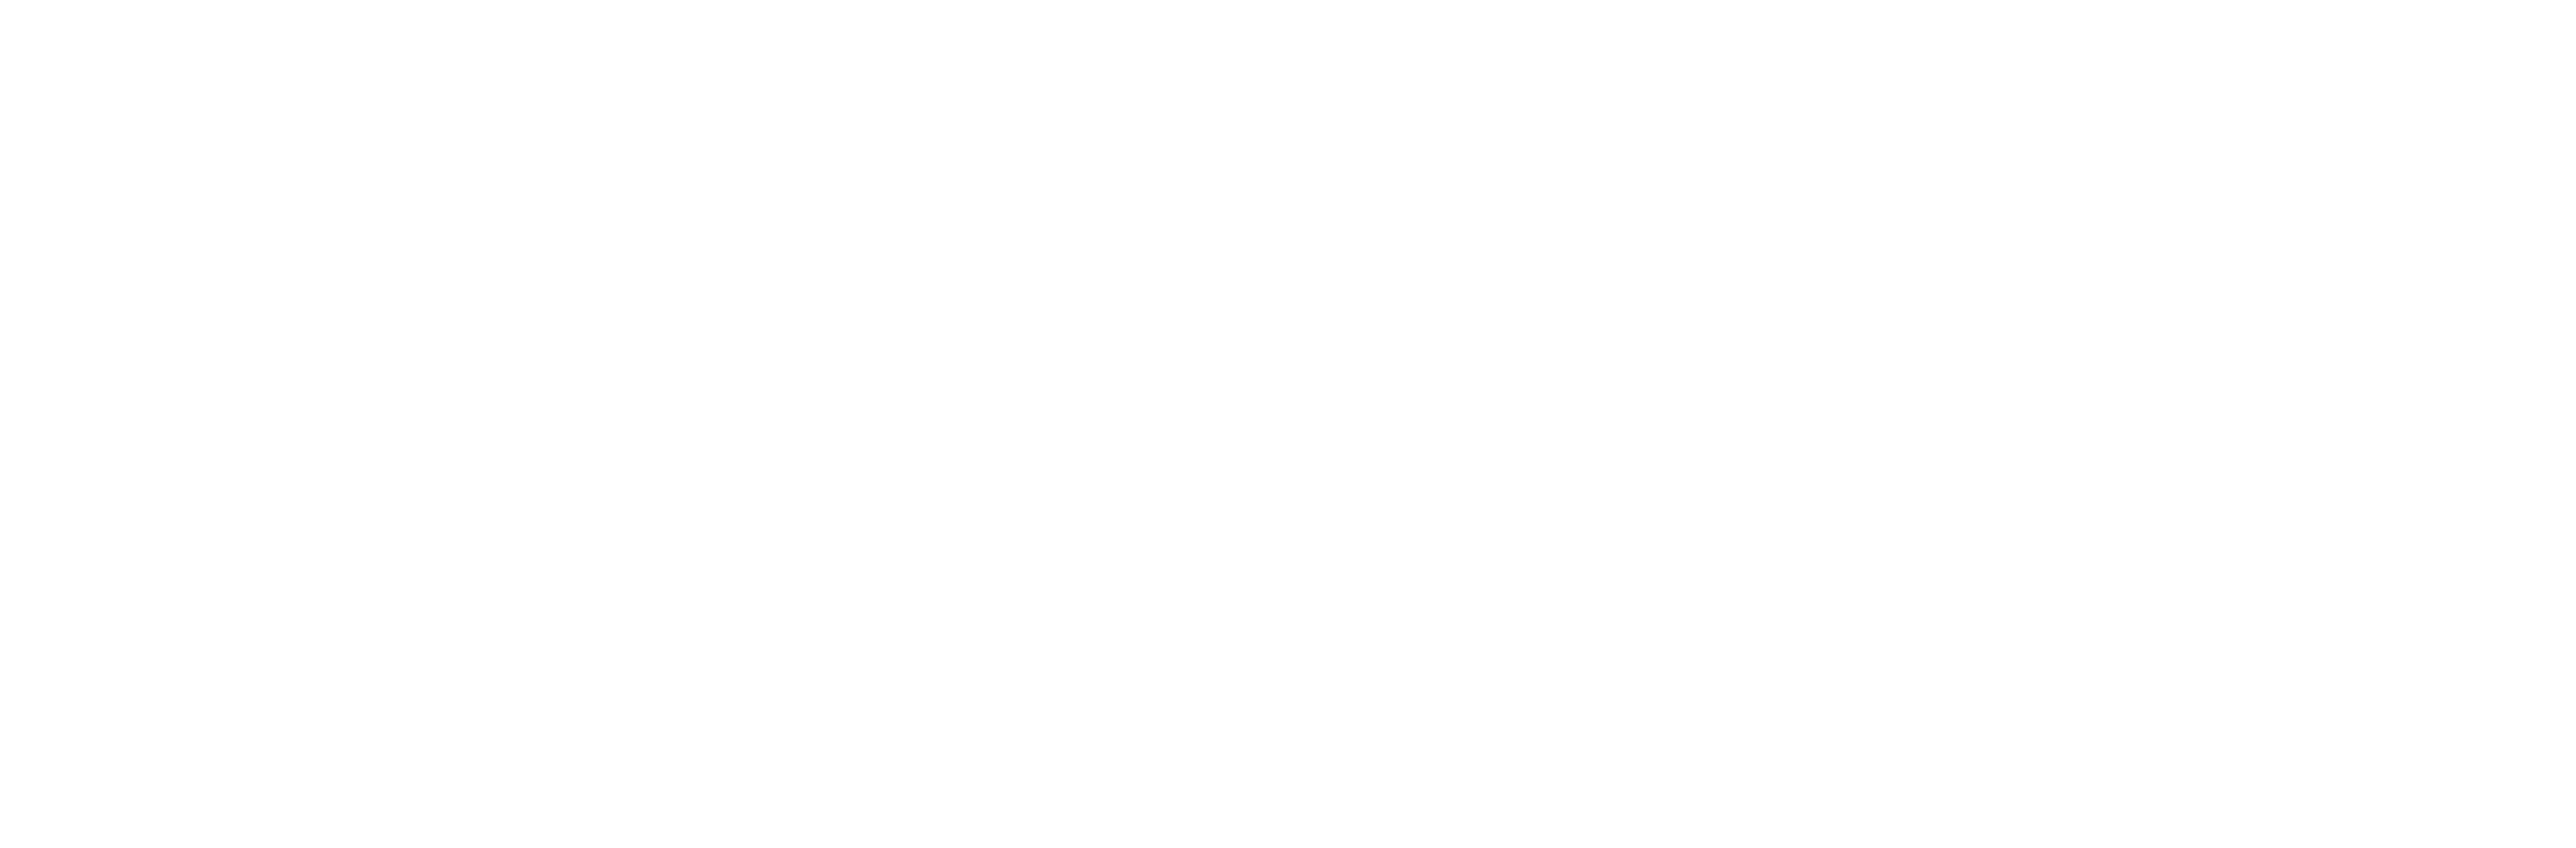 Why Is The Google Logo White - Reverasite